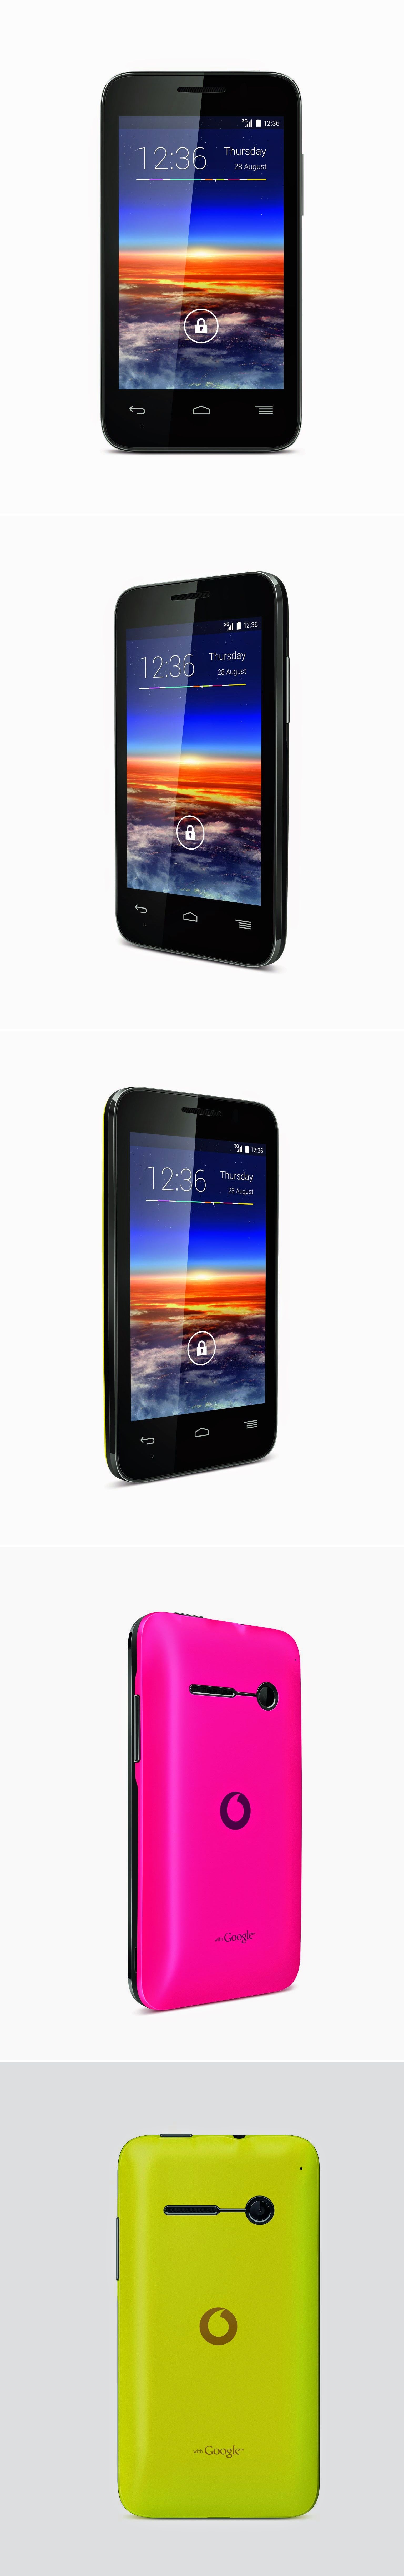 Vodafone Smart 4 mini: szuper okostelefon, verhetetlen áron